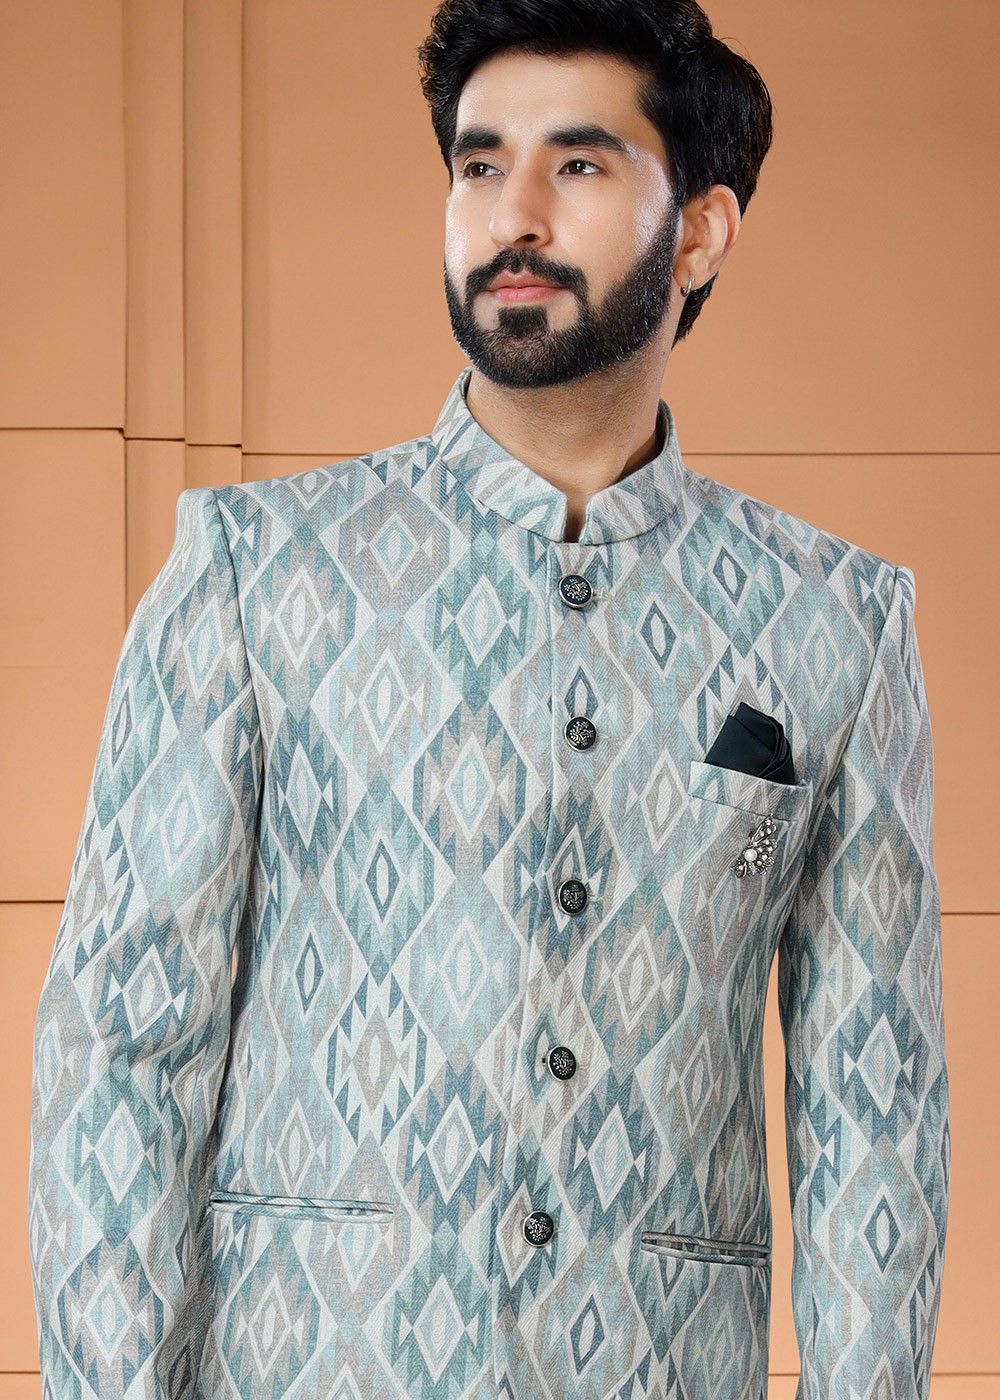 Buy latest Jodhpuri suit online for men at low price in In… | Flickr